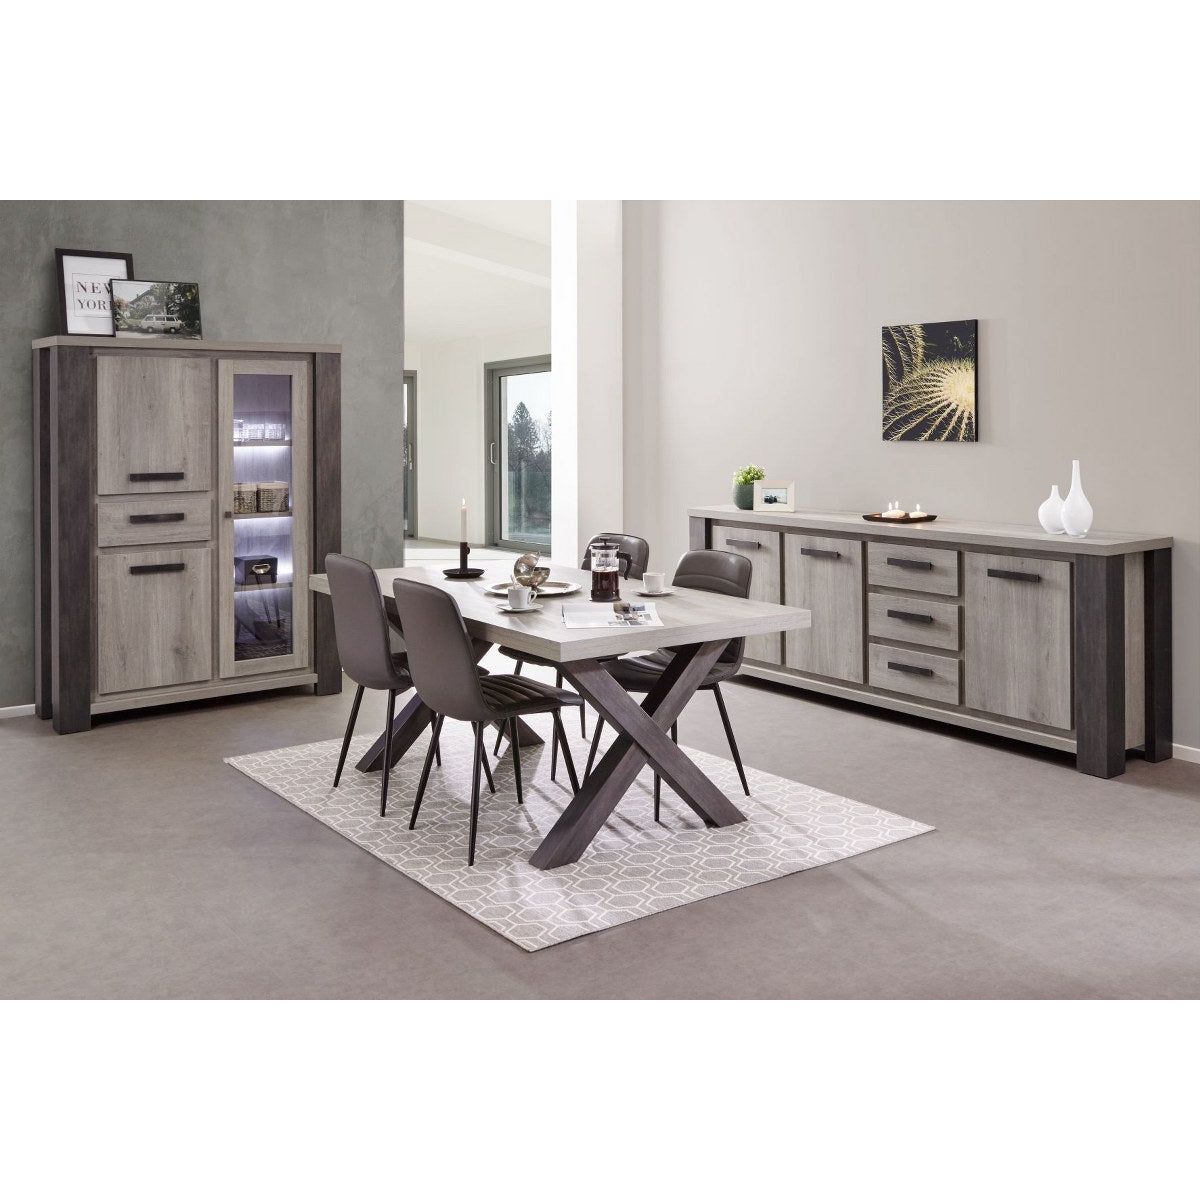 Wall cabinet | Furniture series Annatheo | natural, gray, black |